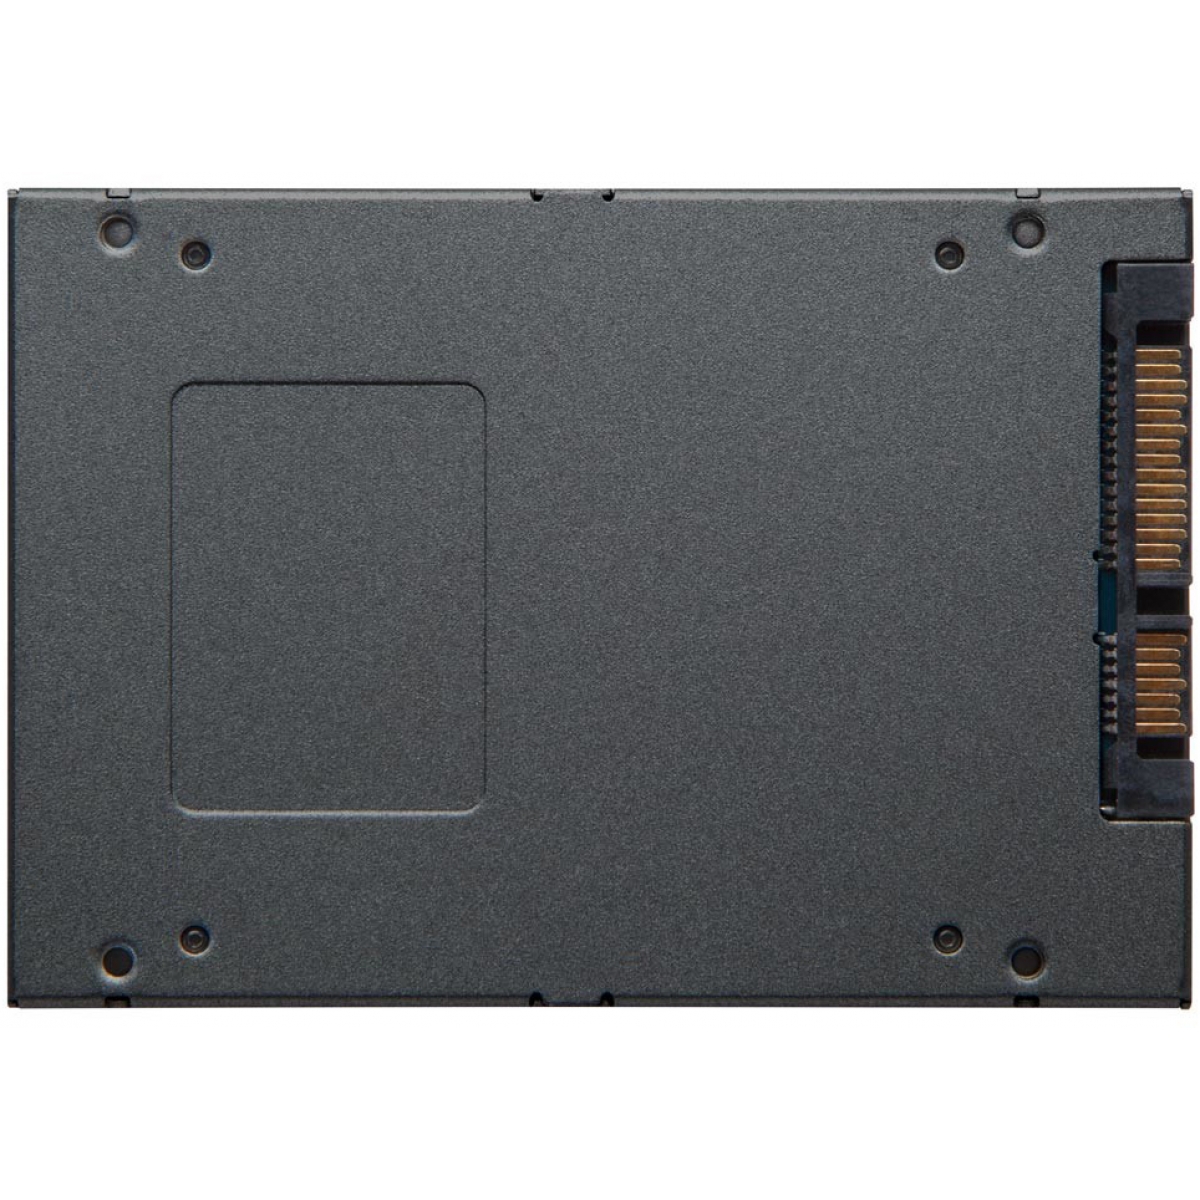 SSD Kingston A400, 480GB, Sata III, Leitura 500MBs Gravação 450MBs, SA400S37/480G - Open Box